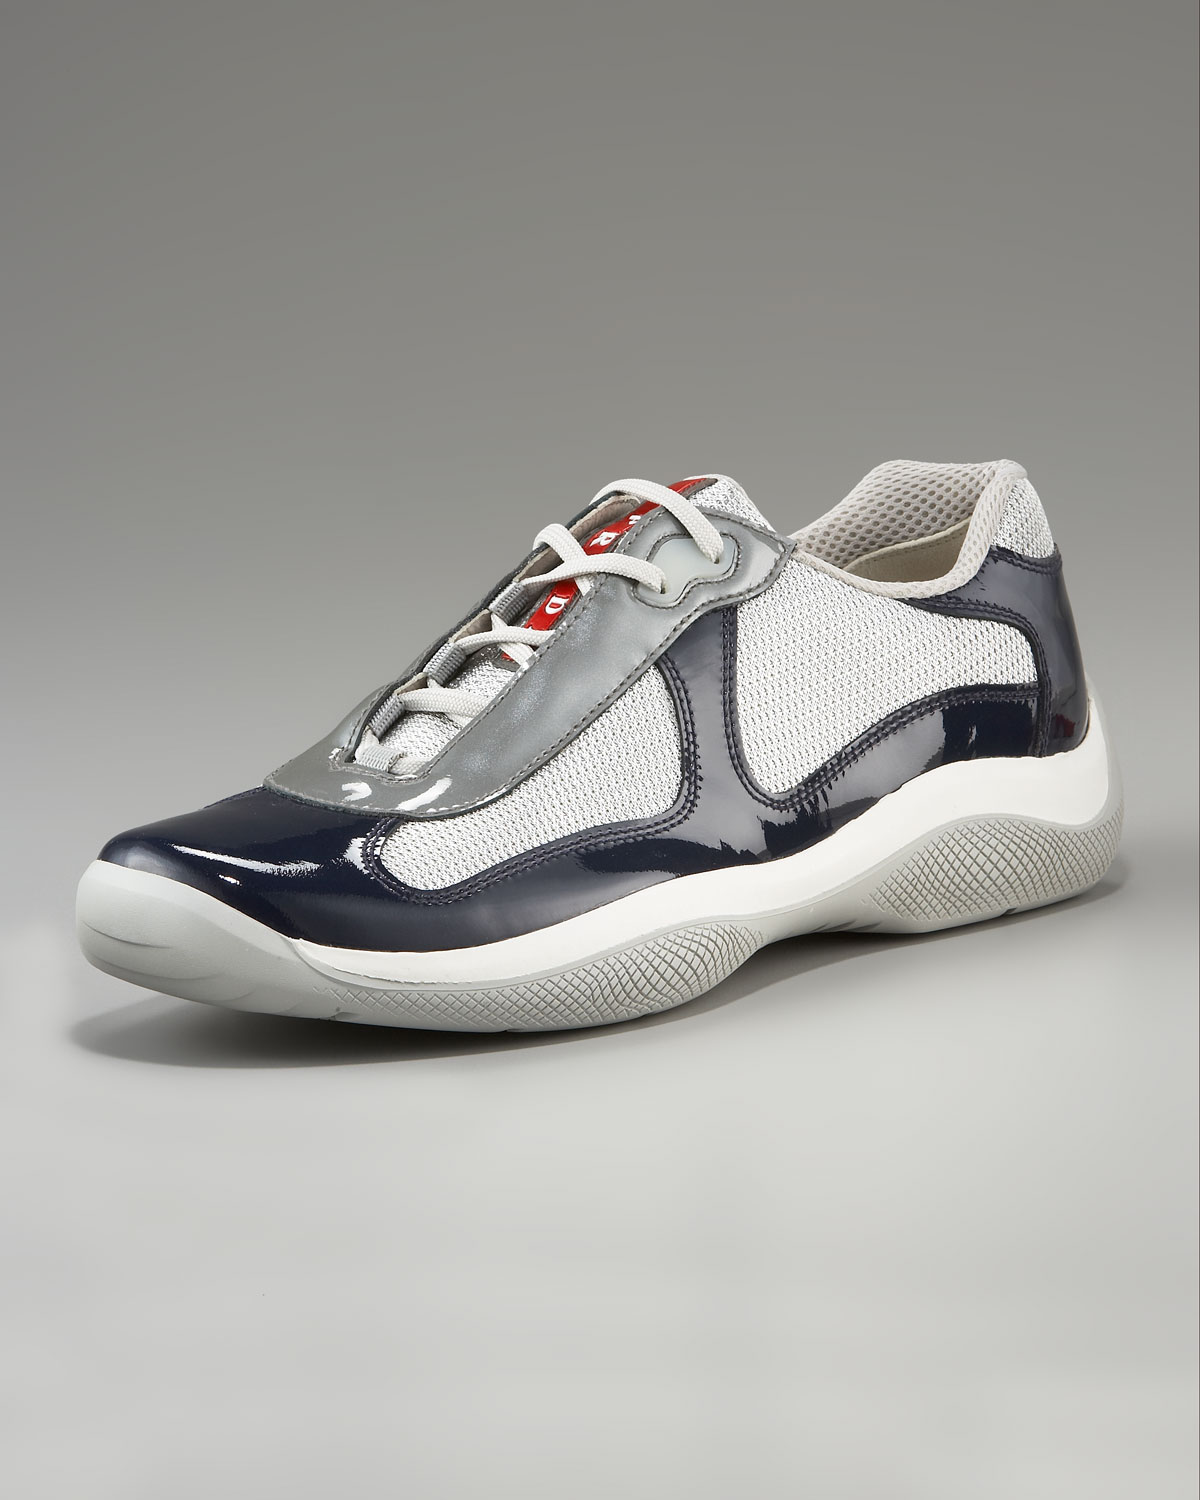 Lyst - Prada Patent Leather Sneaker, Navy in Blue for Men